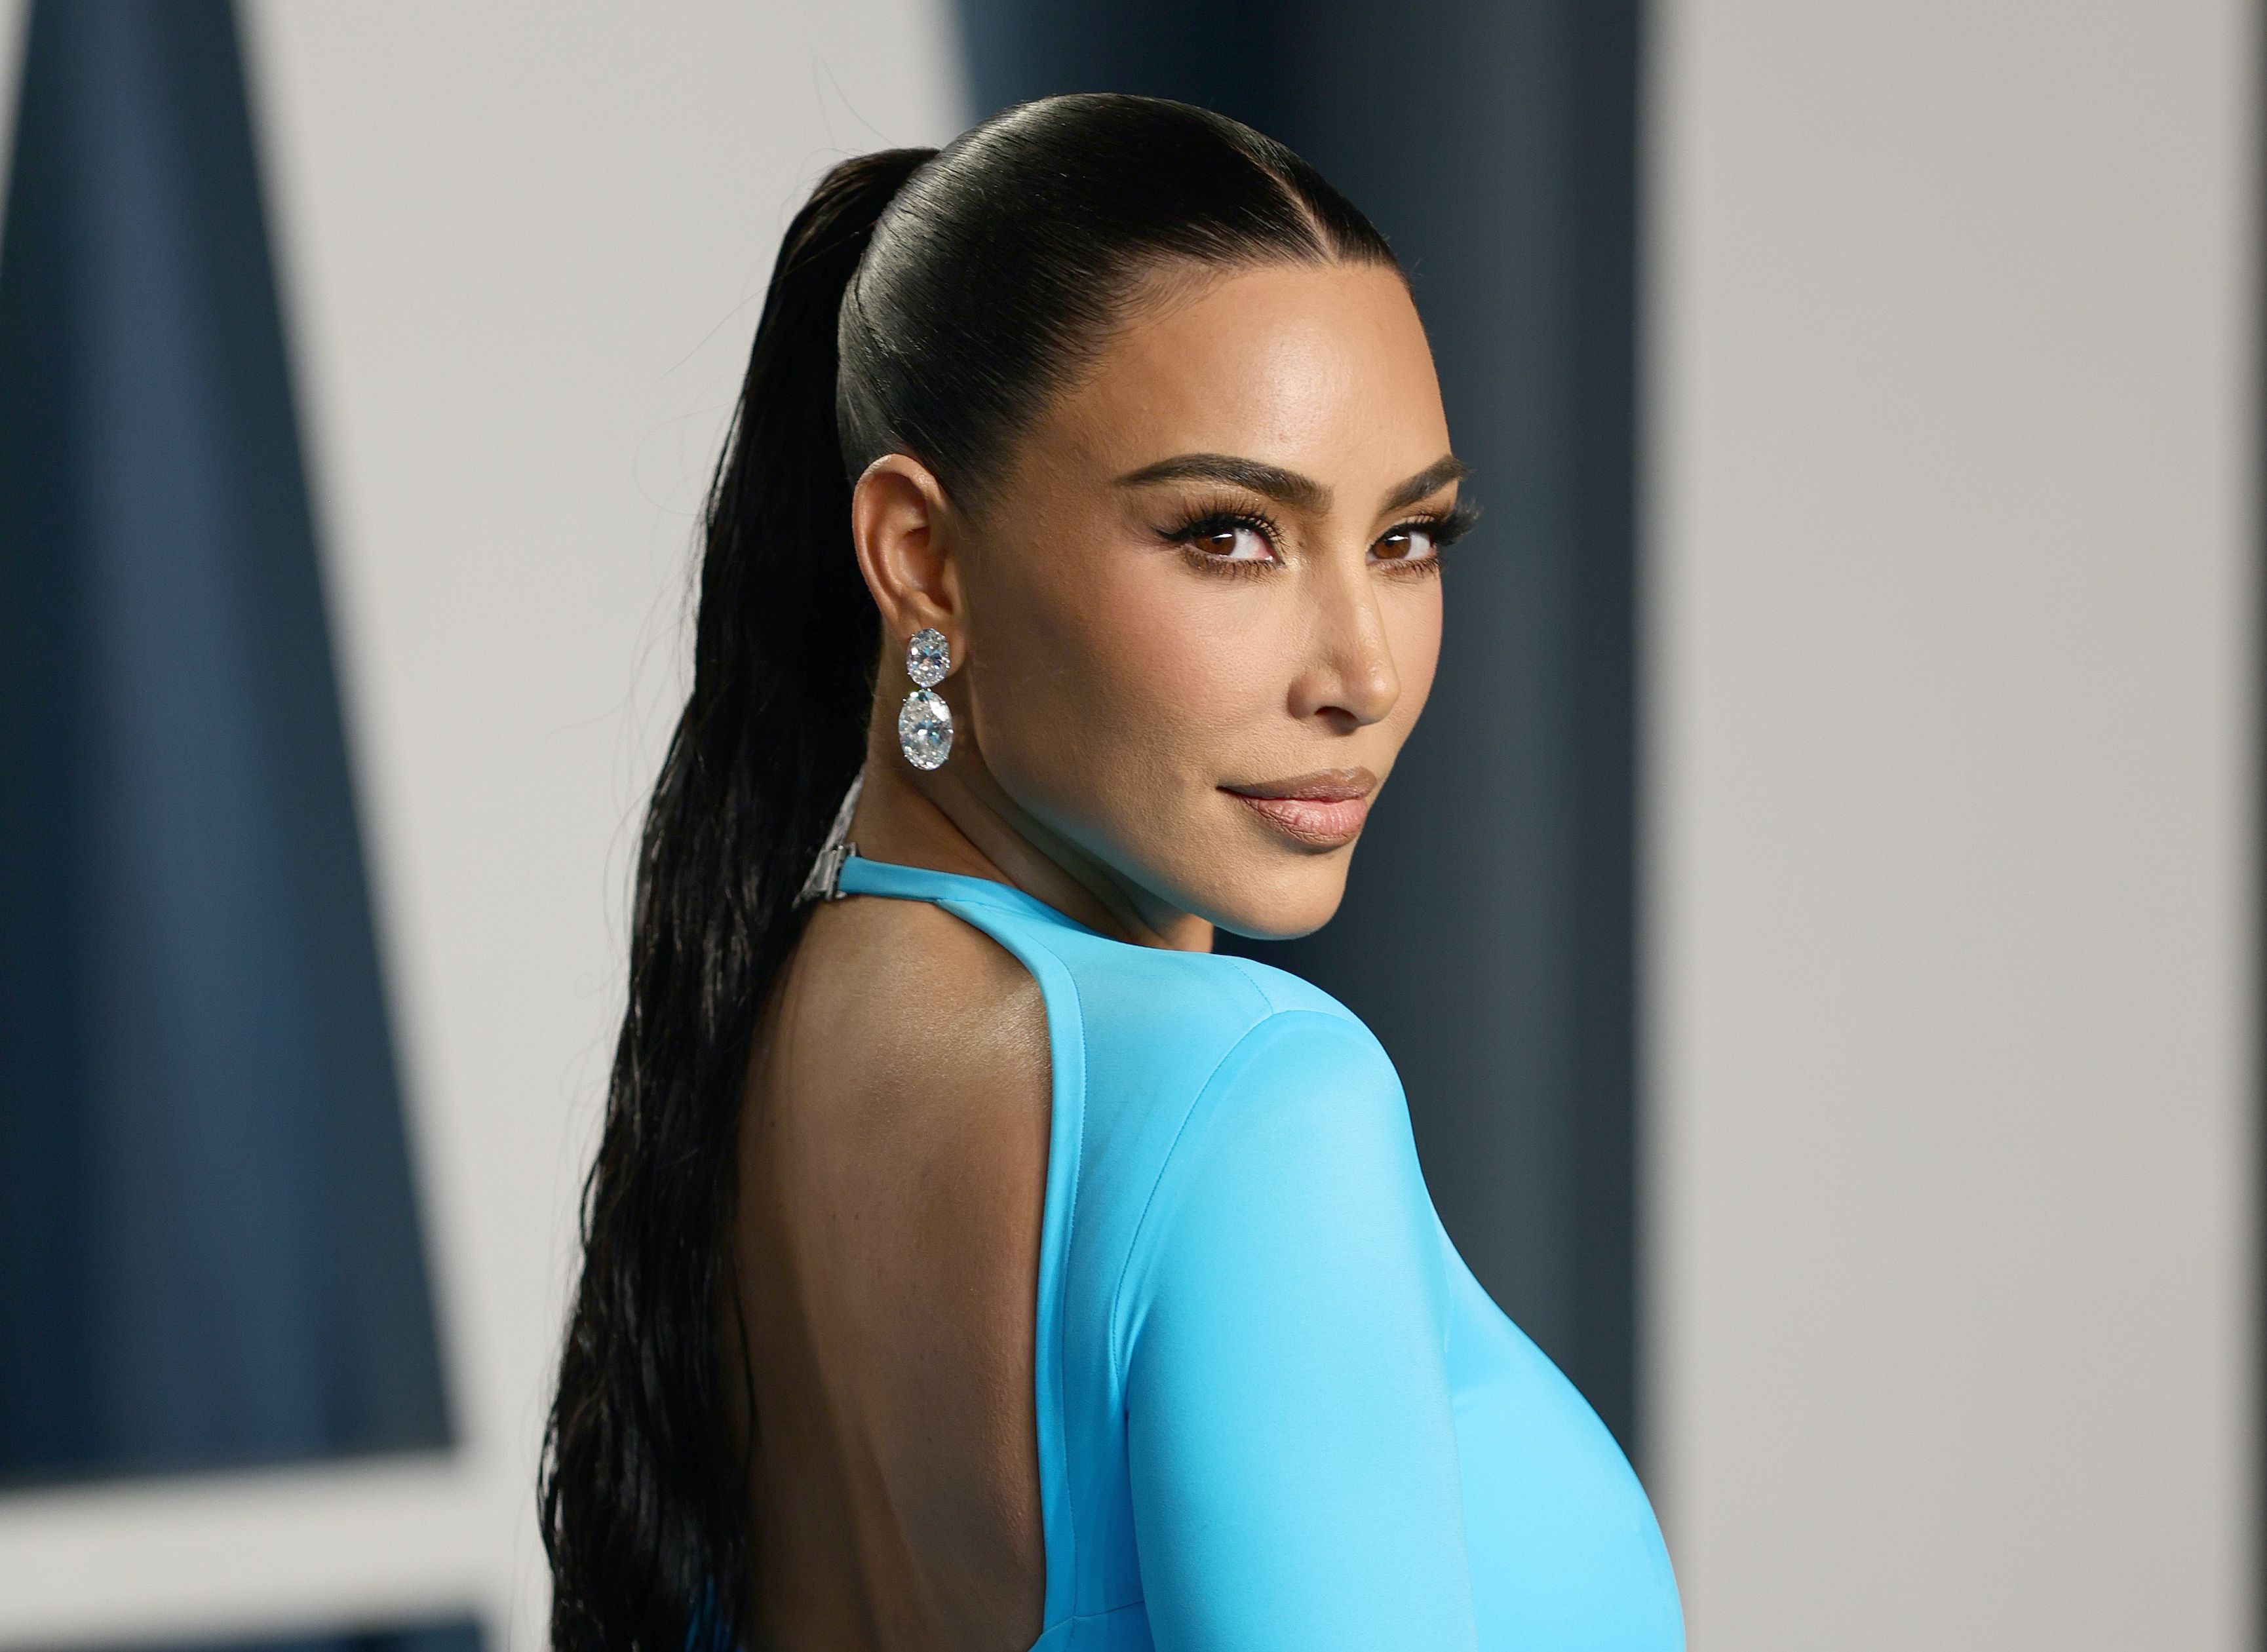 Porn Film Of Kim Kardashian - The Kardashians: Why is Kim's sex tape still talked about in 2022?